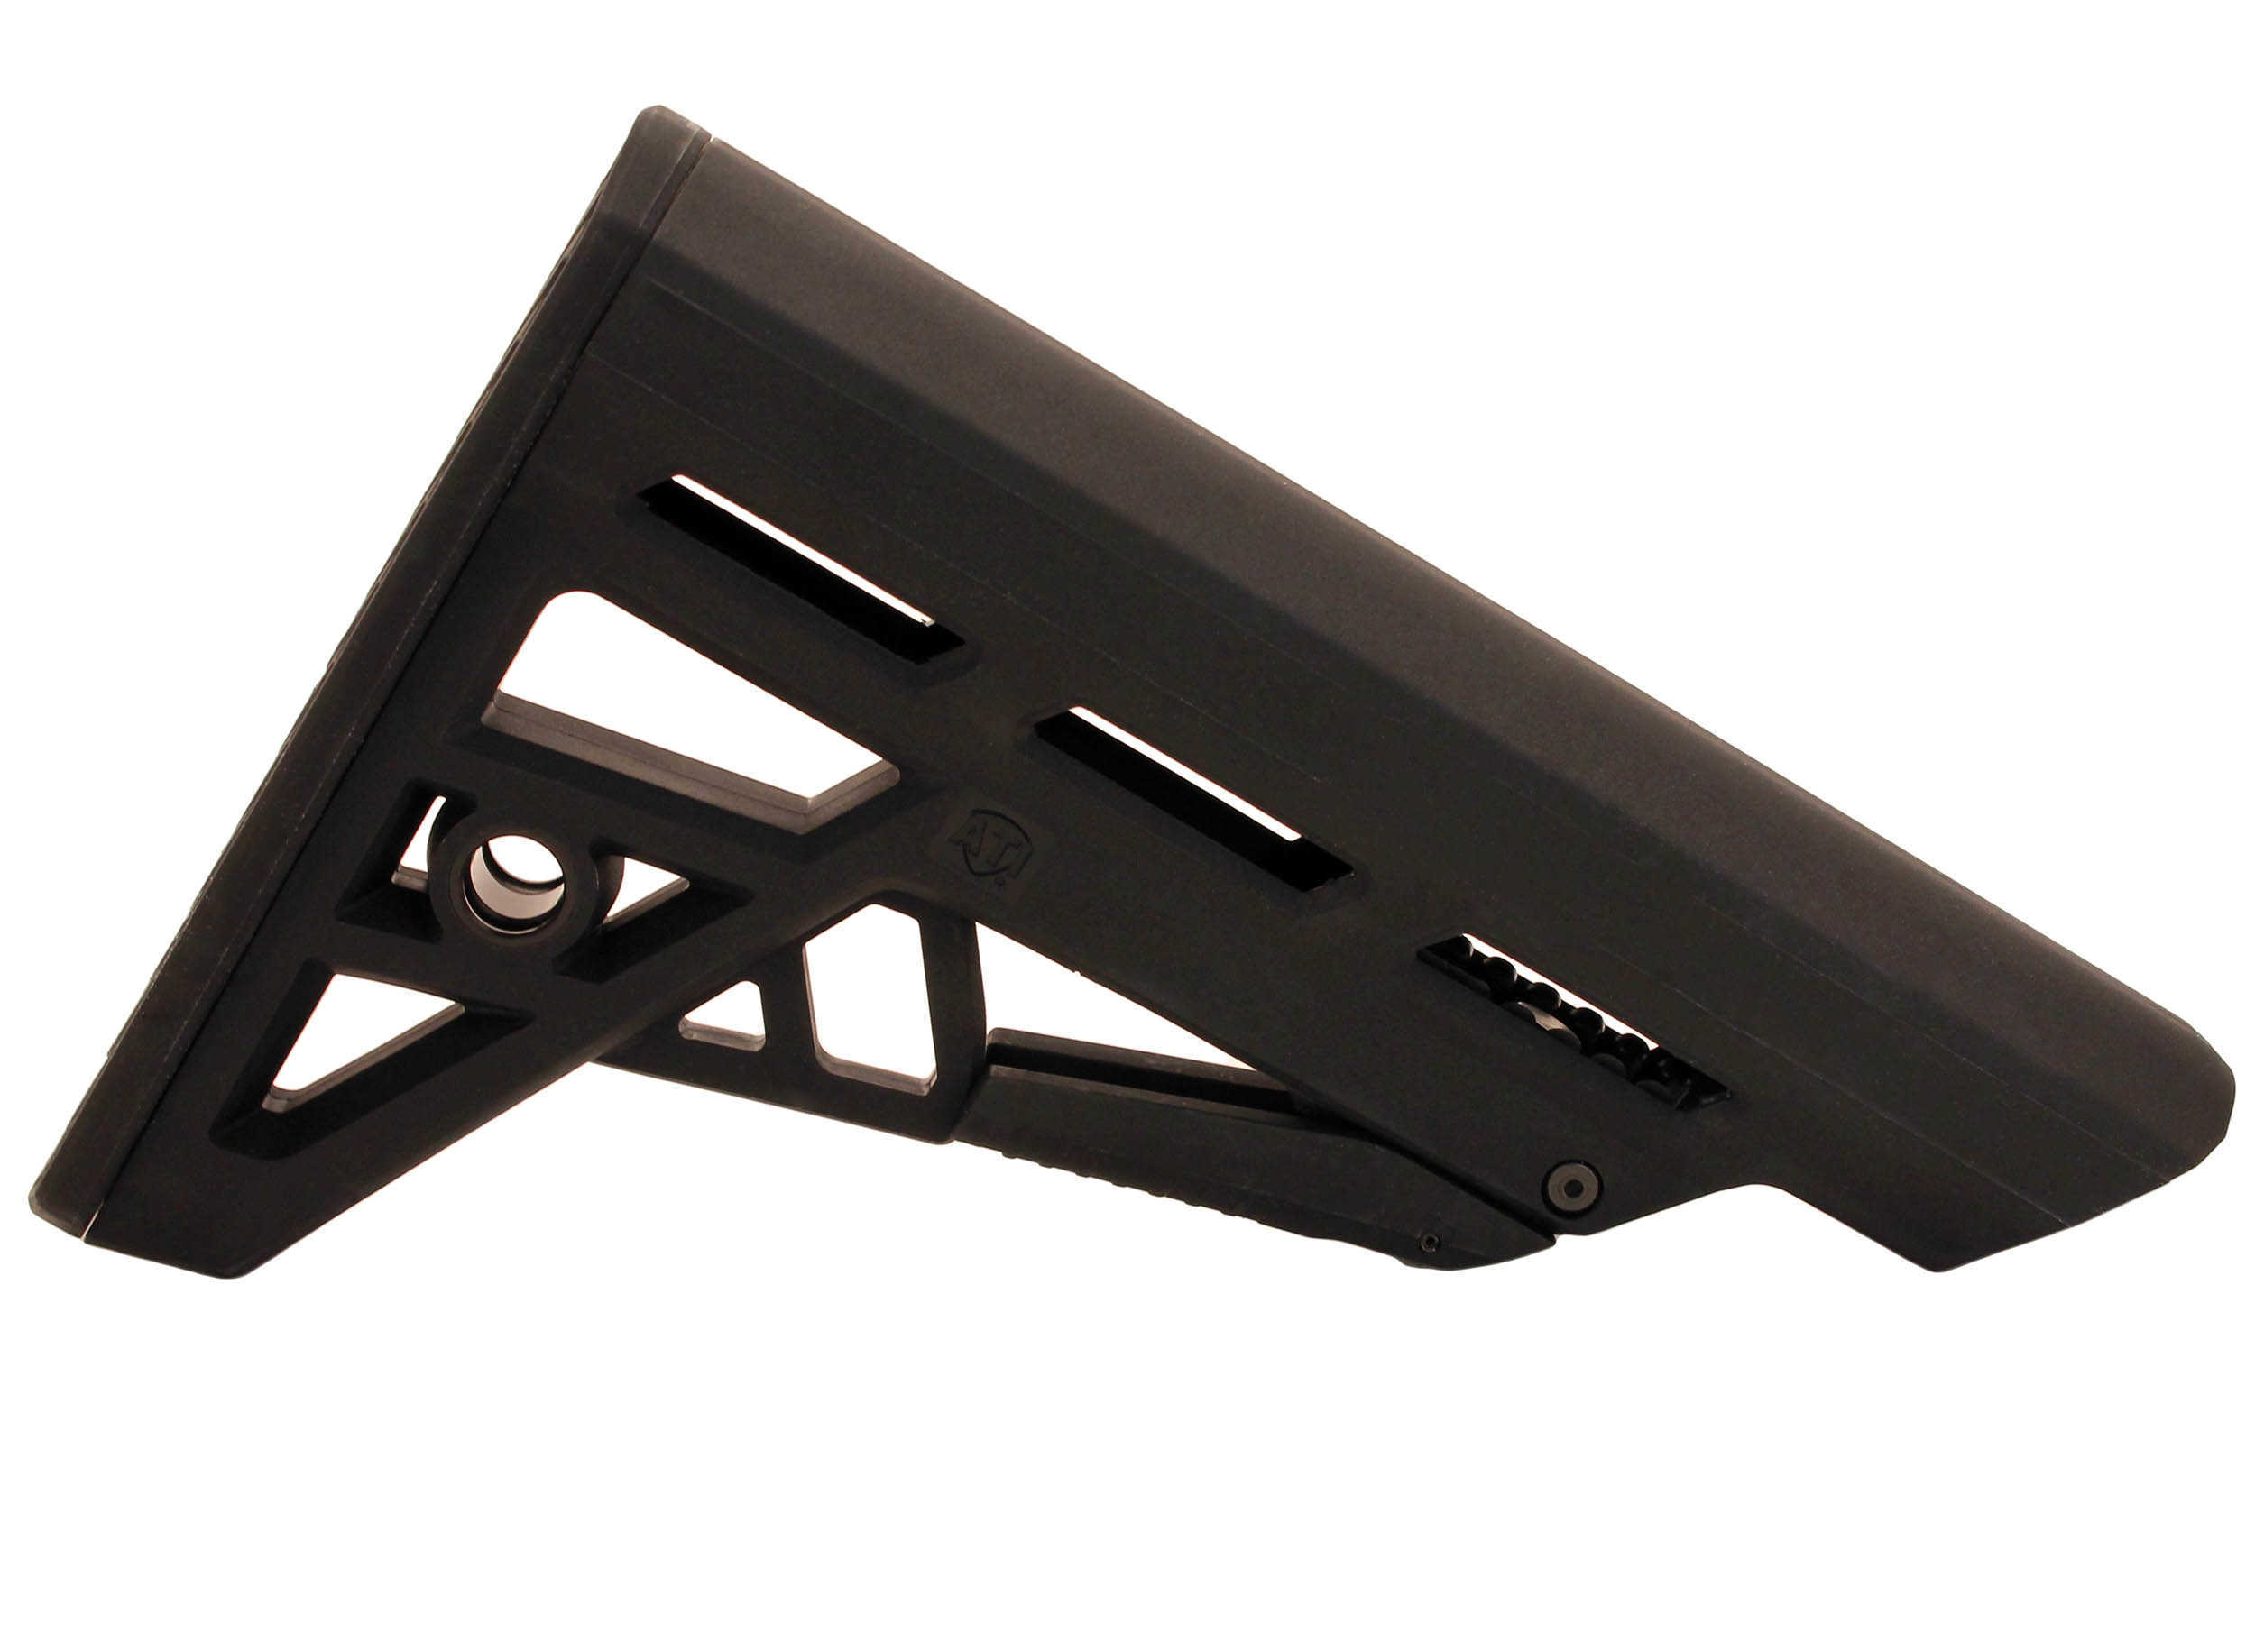 Advanced Technology TactLite AR-15 Mil-Spec Stock, Black Polymer Md: B.2.10.2212